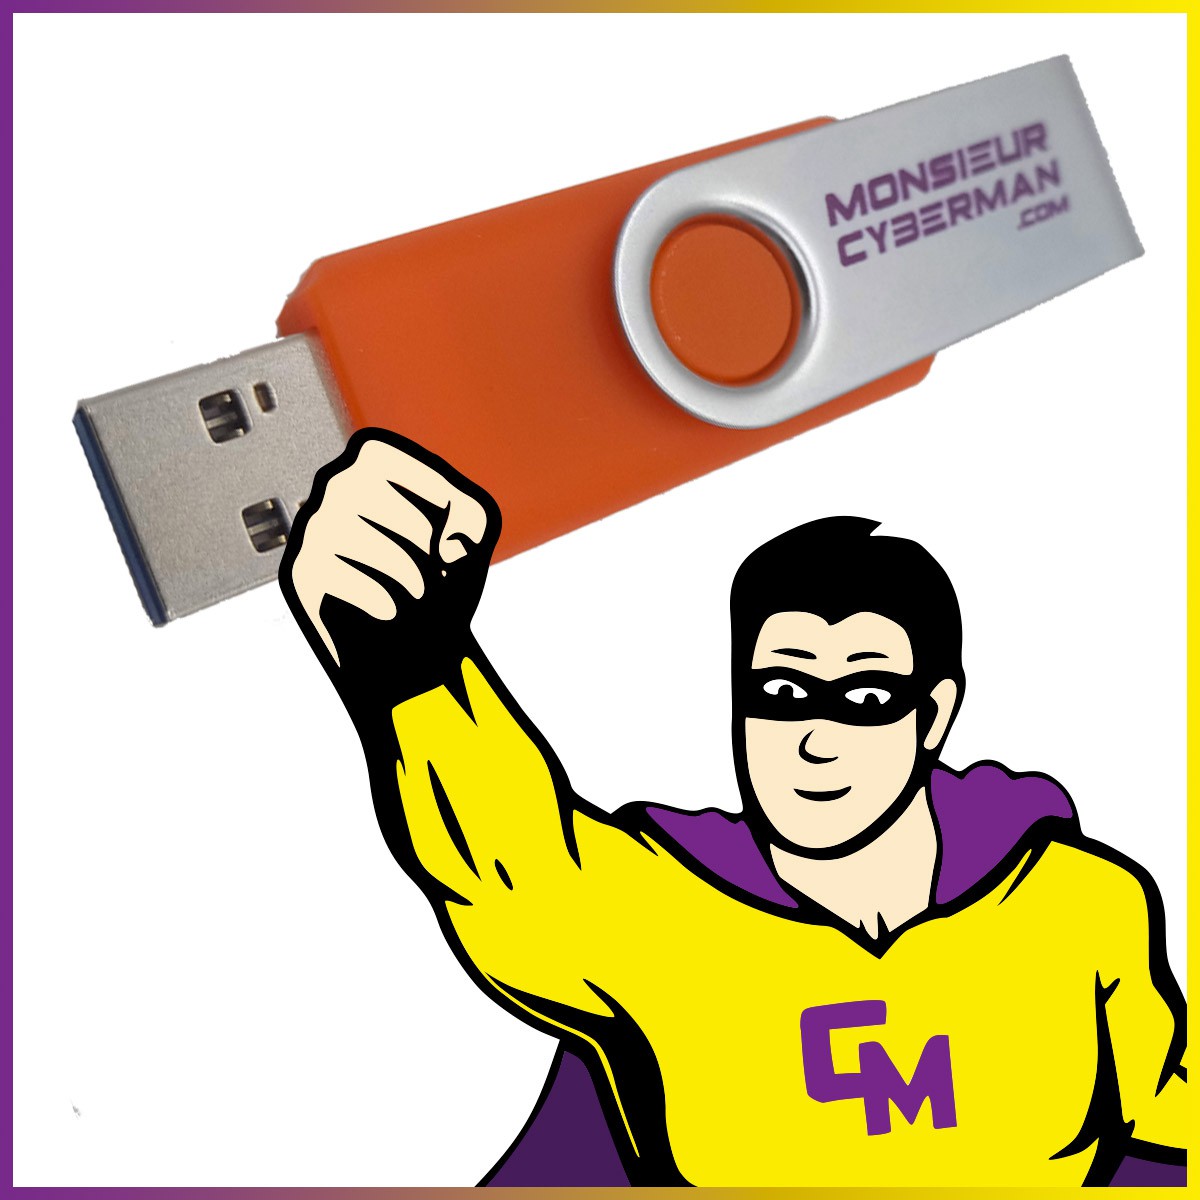 Clé USB 64 Go Monsieur Cyberman.com Orange USB 3.0 Flash Drive Stockage  NEUF - MonsieurCyberMan